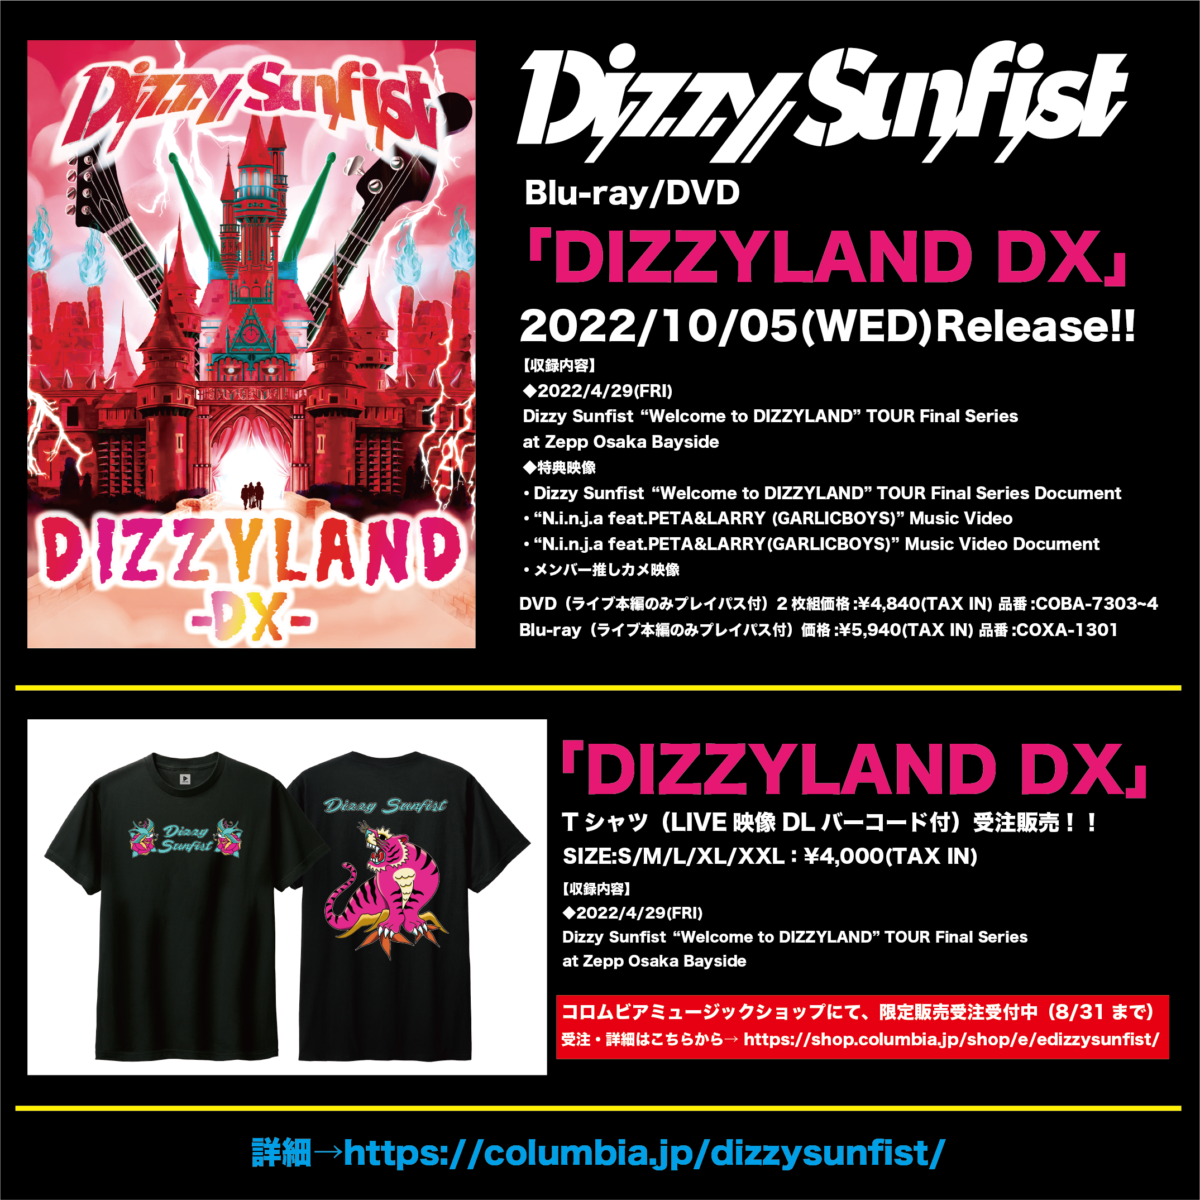 Blu-ray / DVD 「DIZZYLAND DX」 2022/10/05(WED)リリース決定 